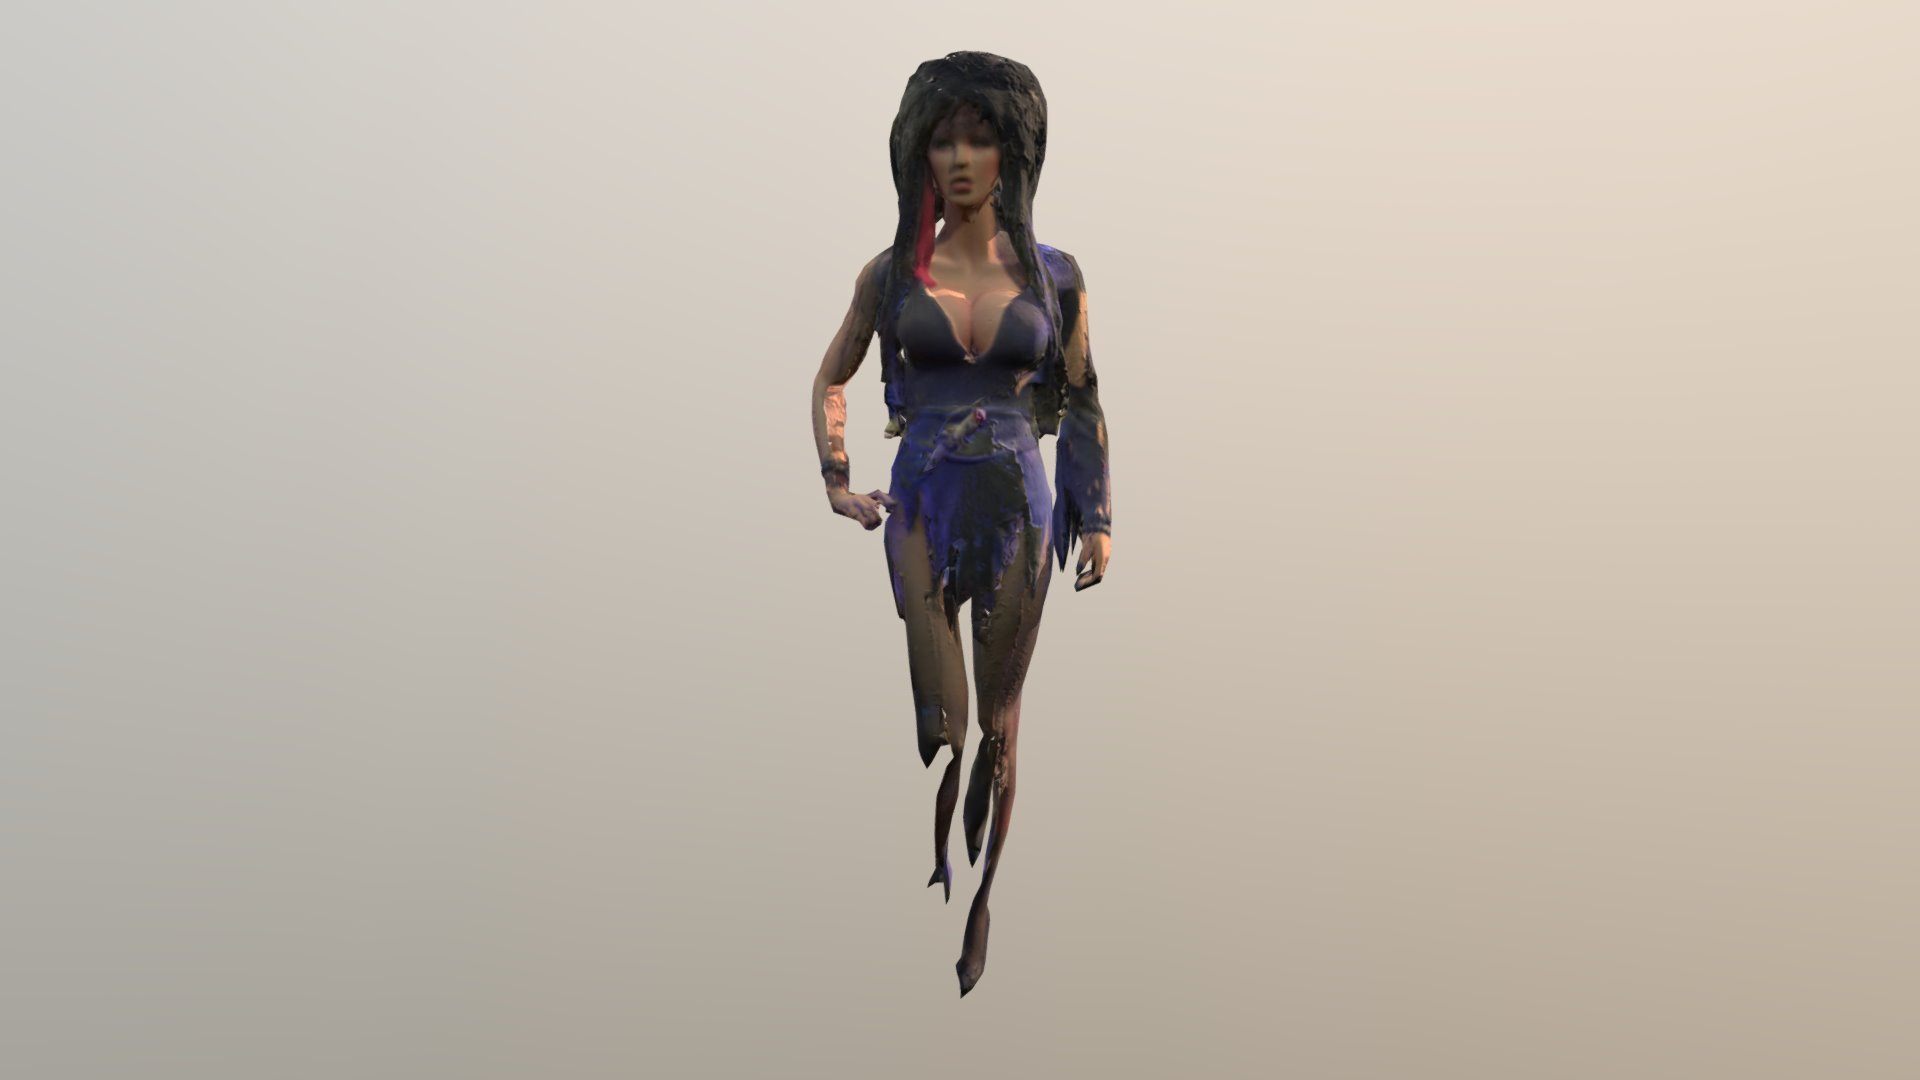 Elvira, Mistress Of The Dark